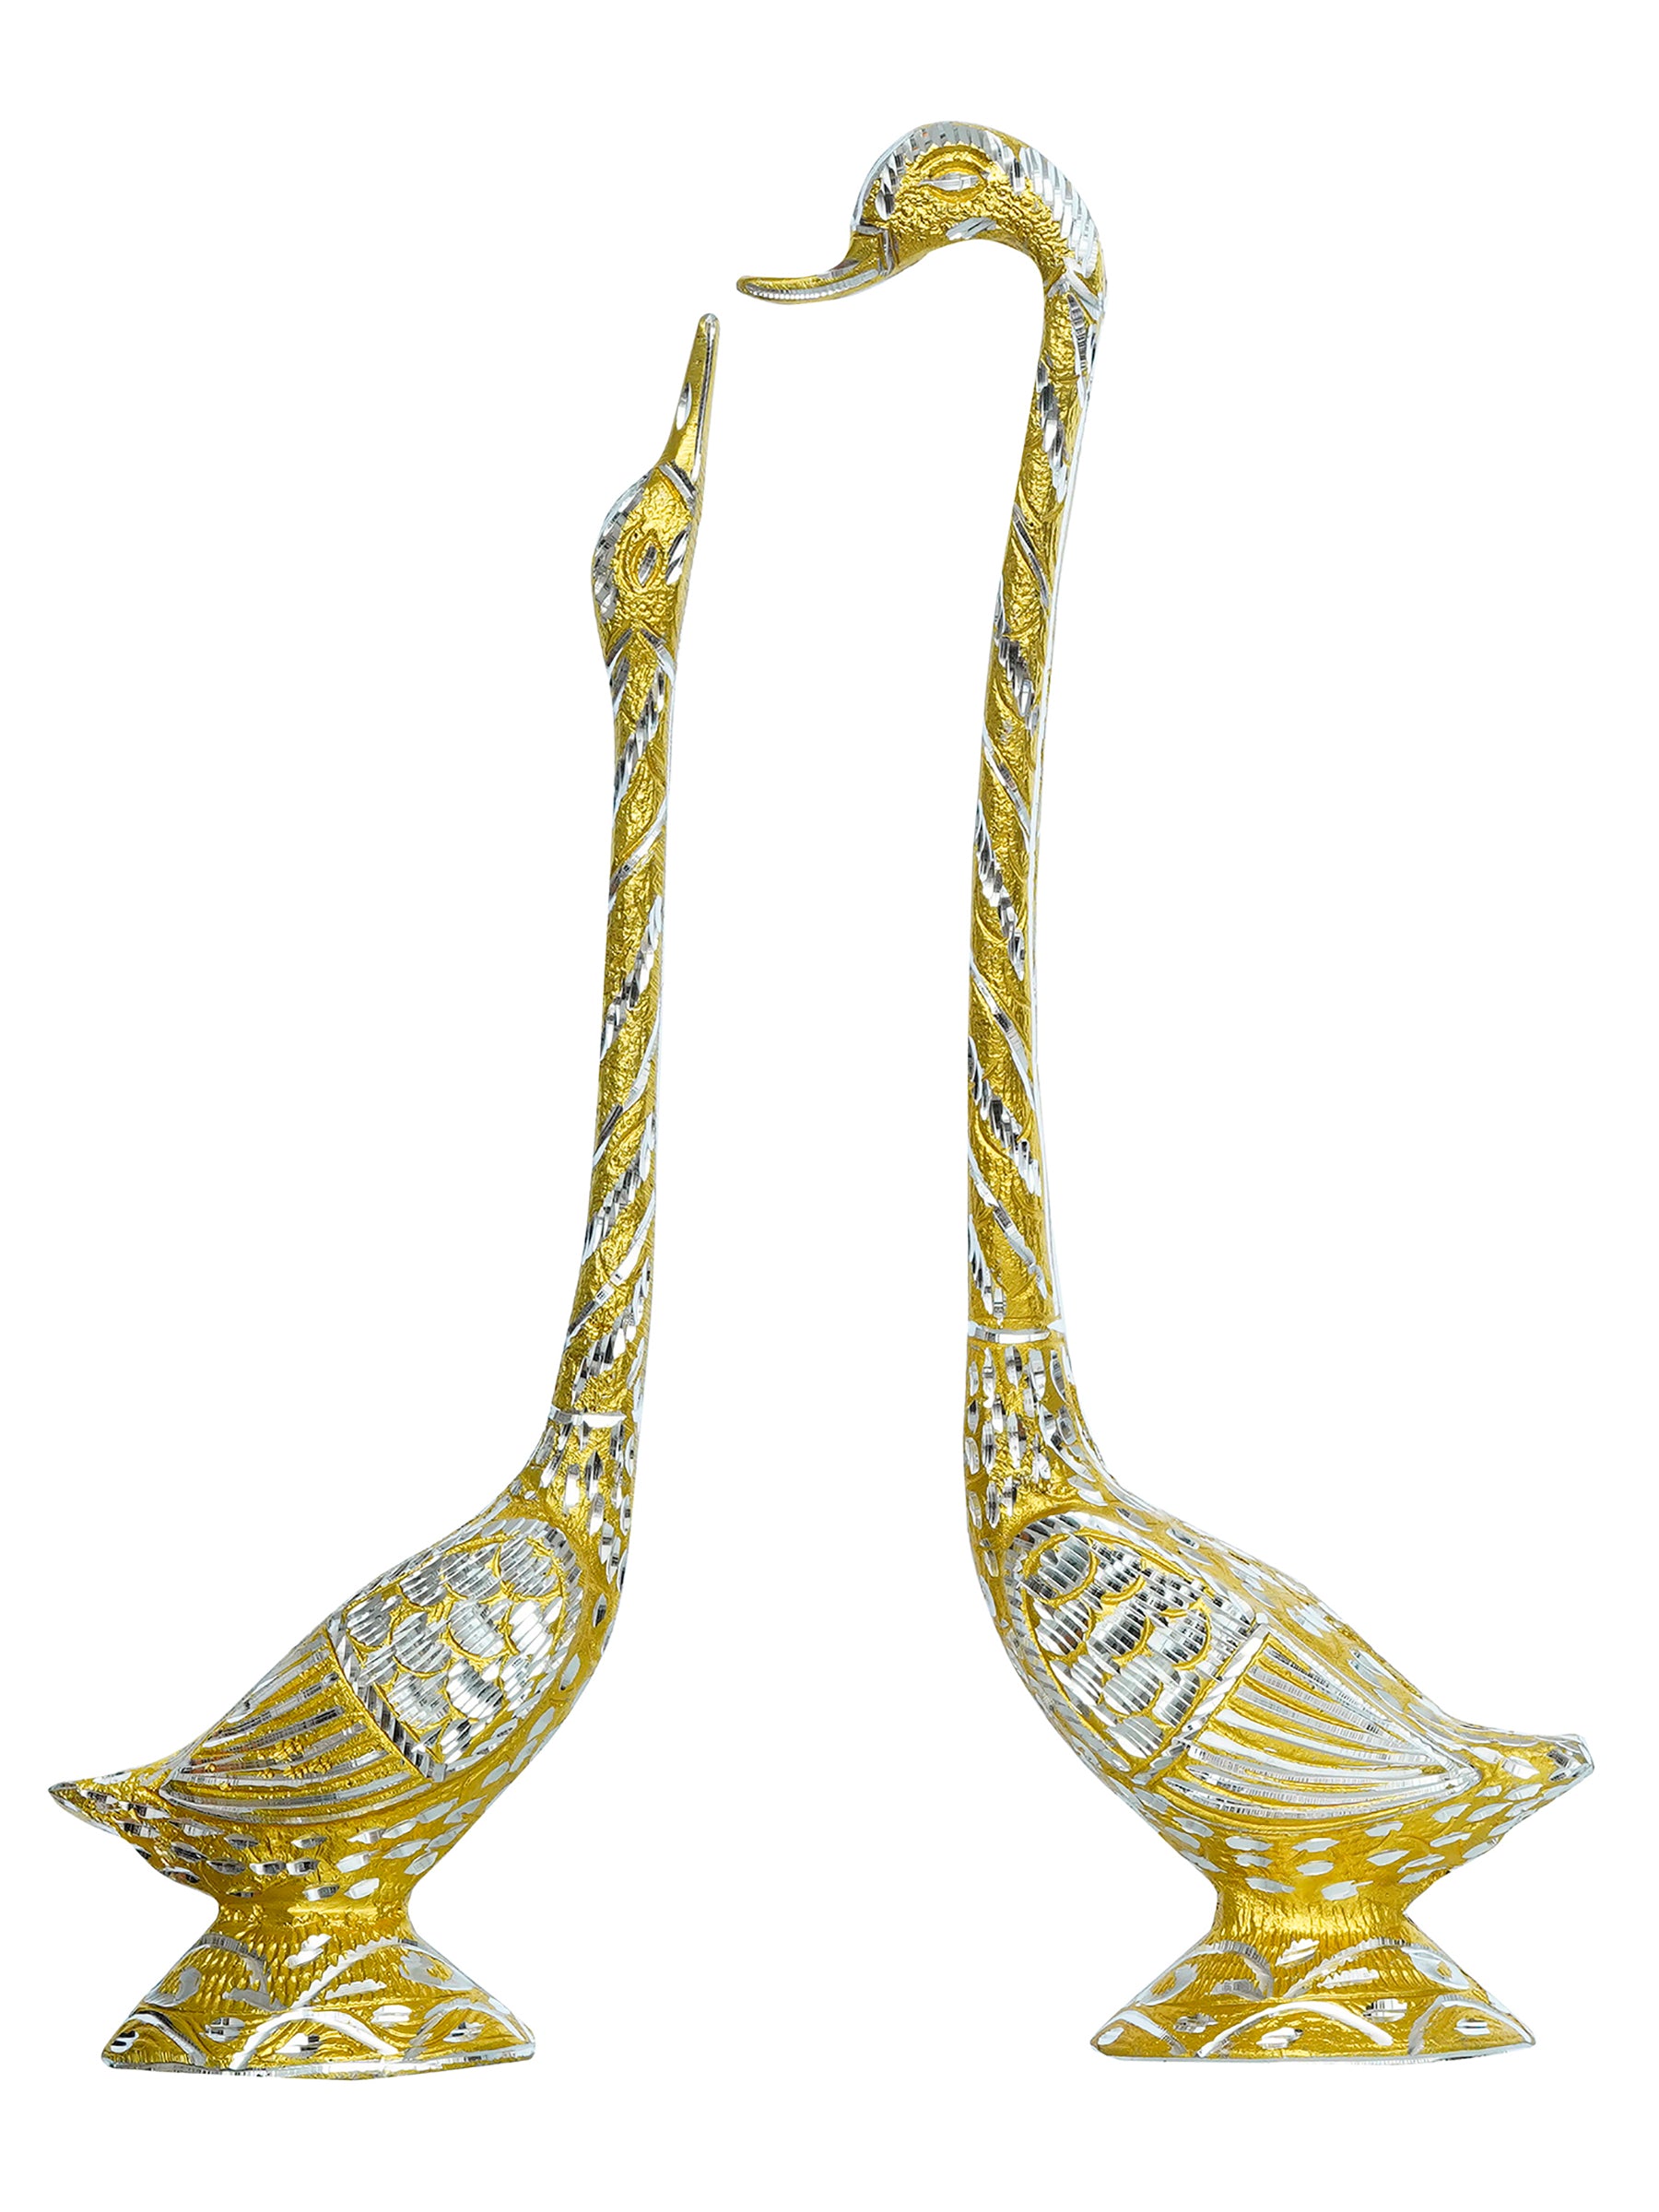 Golden Metal Kissing Swan Couple Handcrafted Decorative showpiece Love Bird Figurines 4